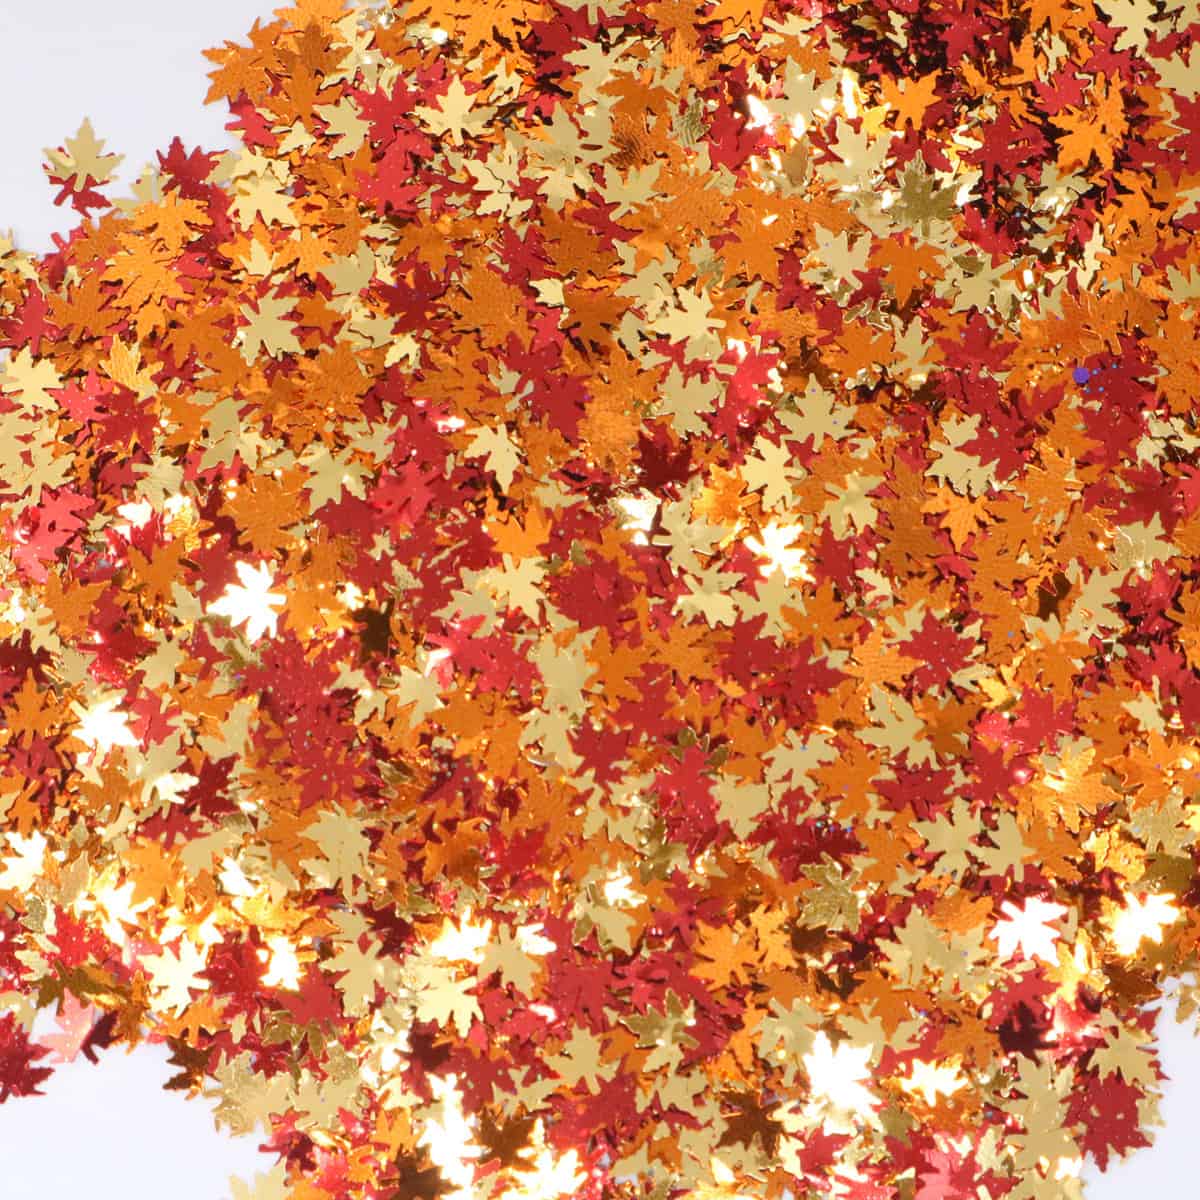 Red and orange maple leaf glitter